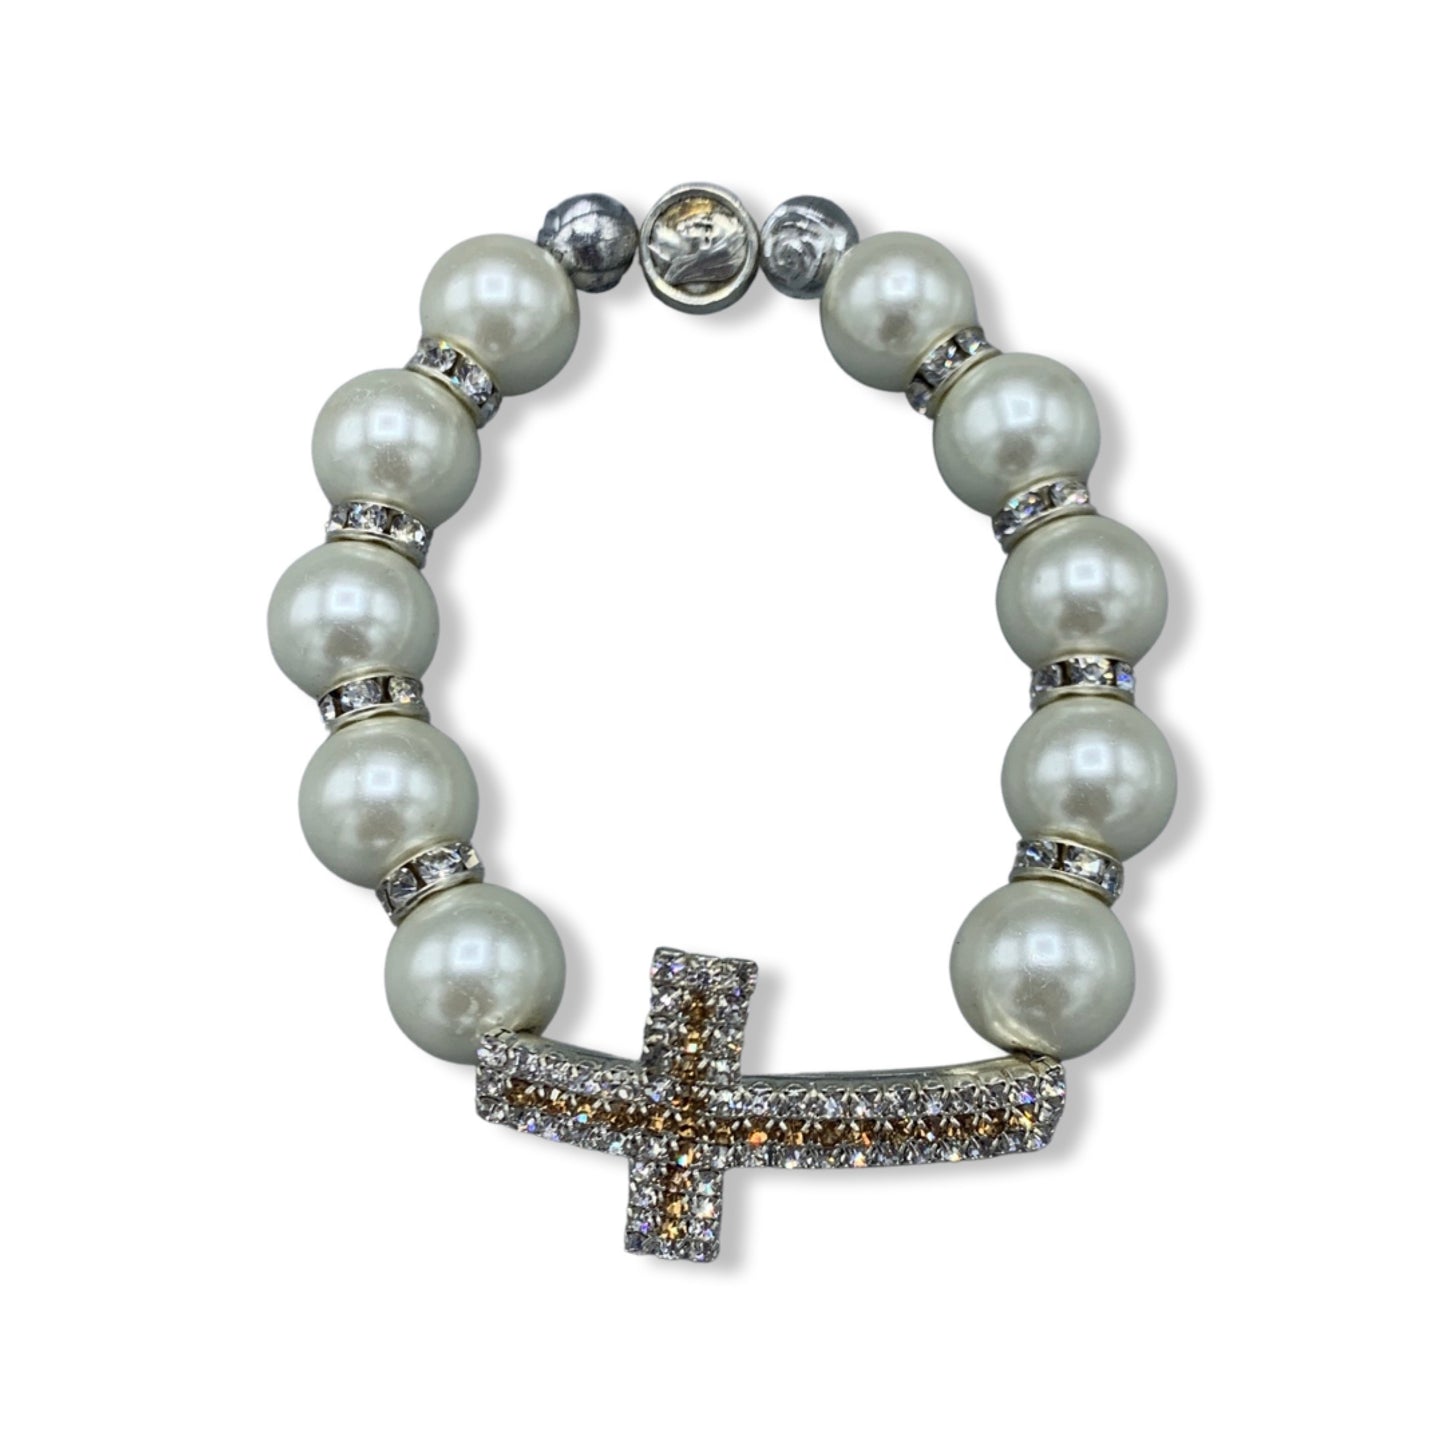 Imitation Pearl Bracelet with Rhinestone Cross of Assorted Styles